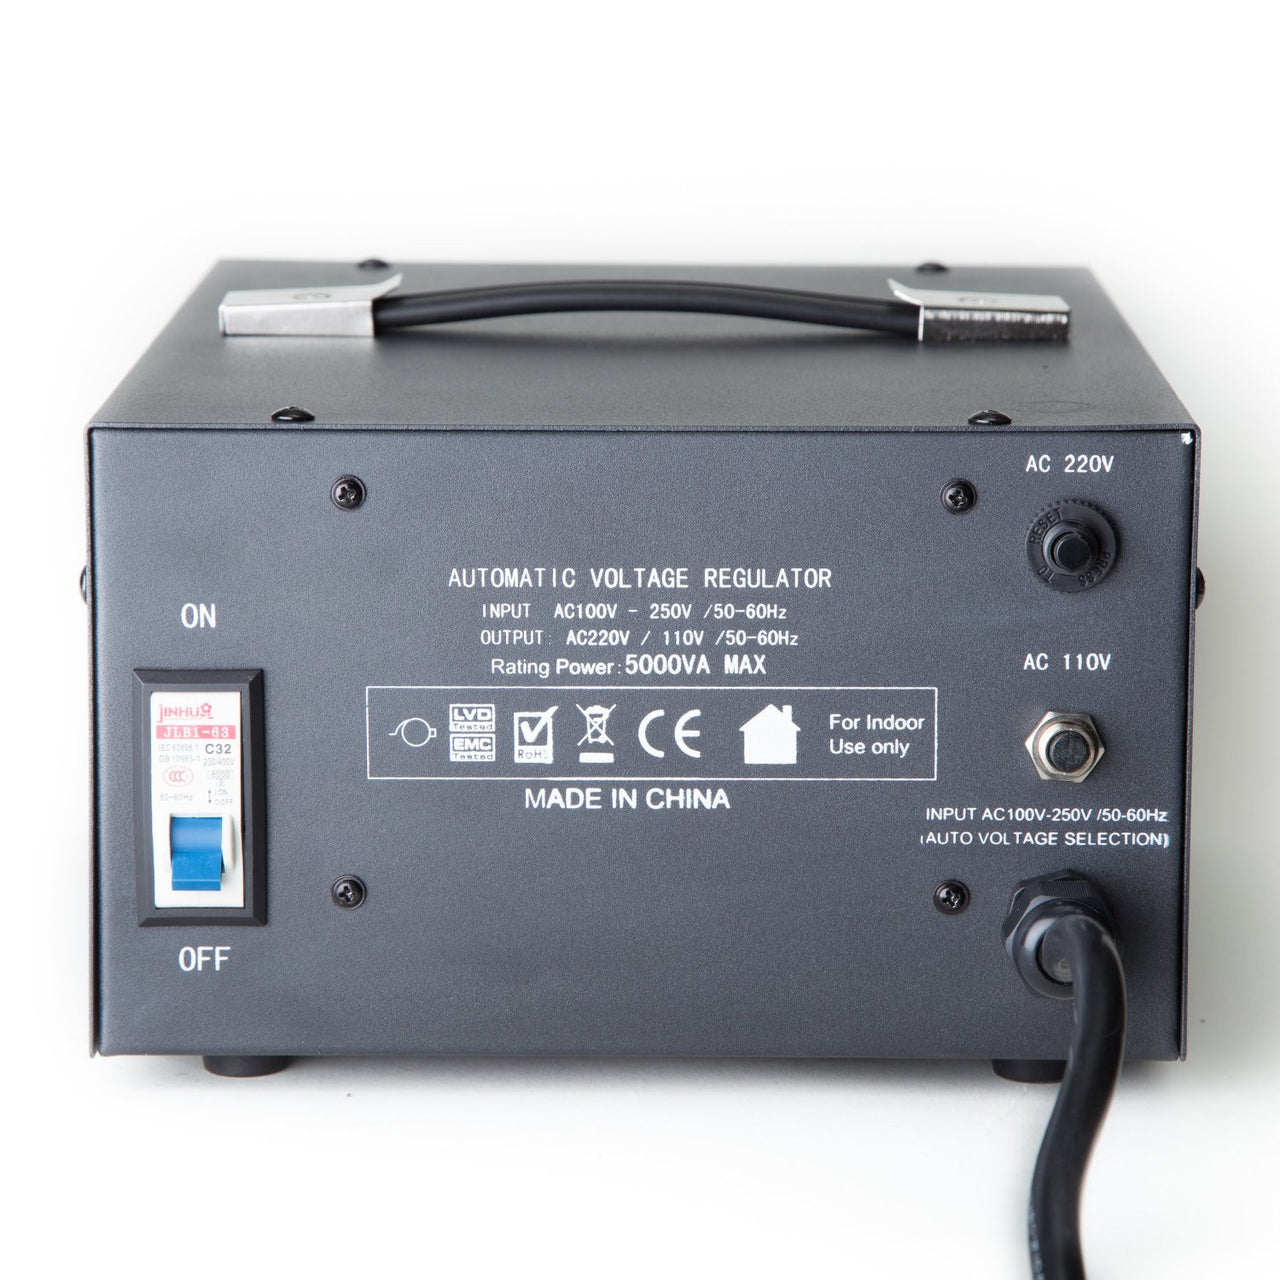 ELC TR-5000 5000 Watt Voltage Regulator with Transformer Step Up Down 110V/220V Circuit Breaker Protection - Popularelectronics.com